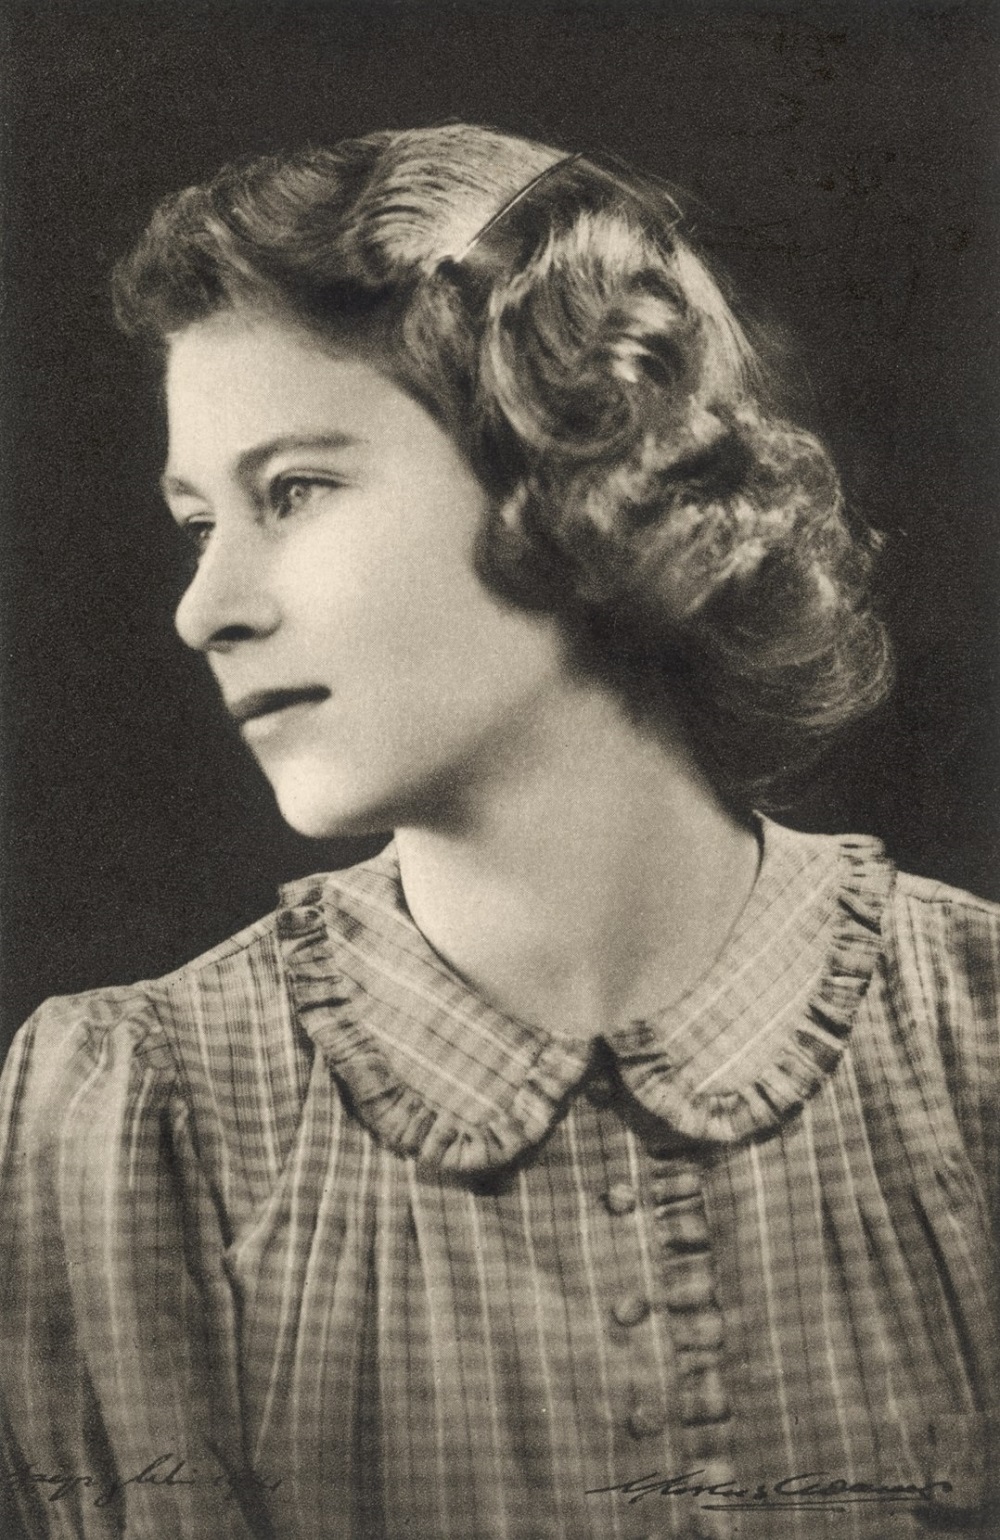 Photograph of a young Queen Elizabeth II when she was Princess Elizabeth